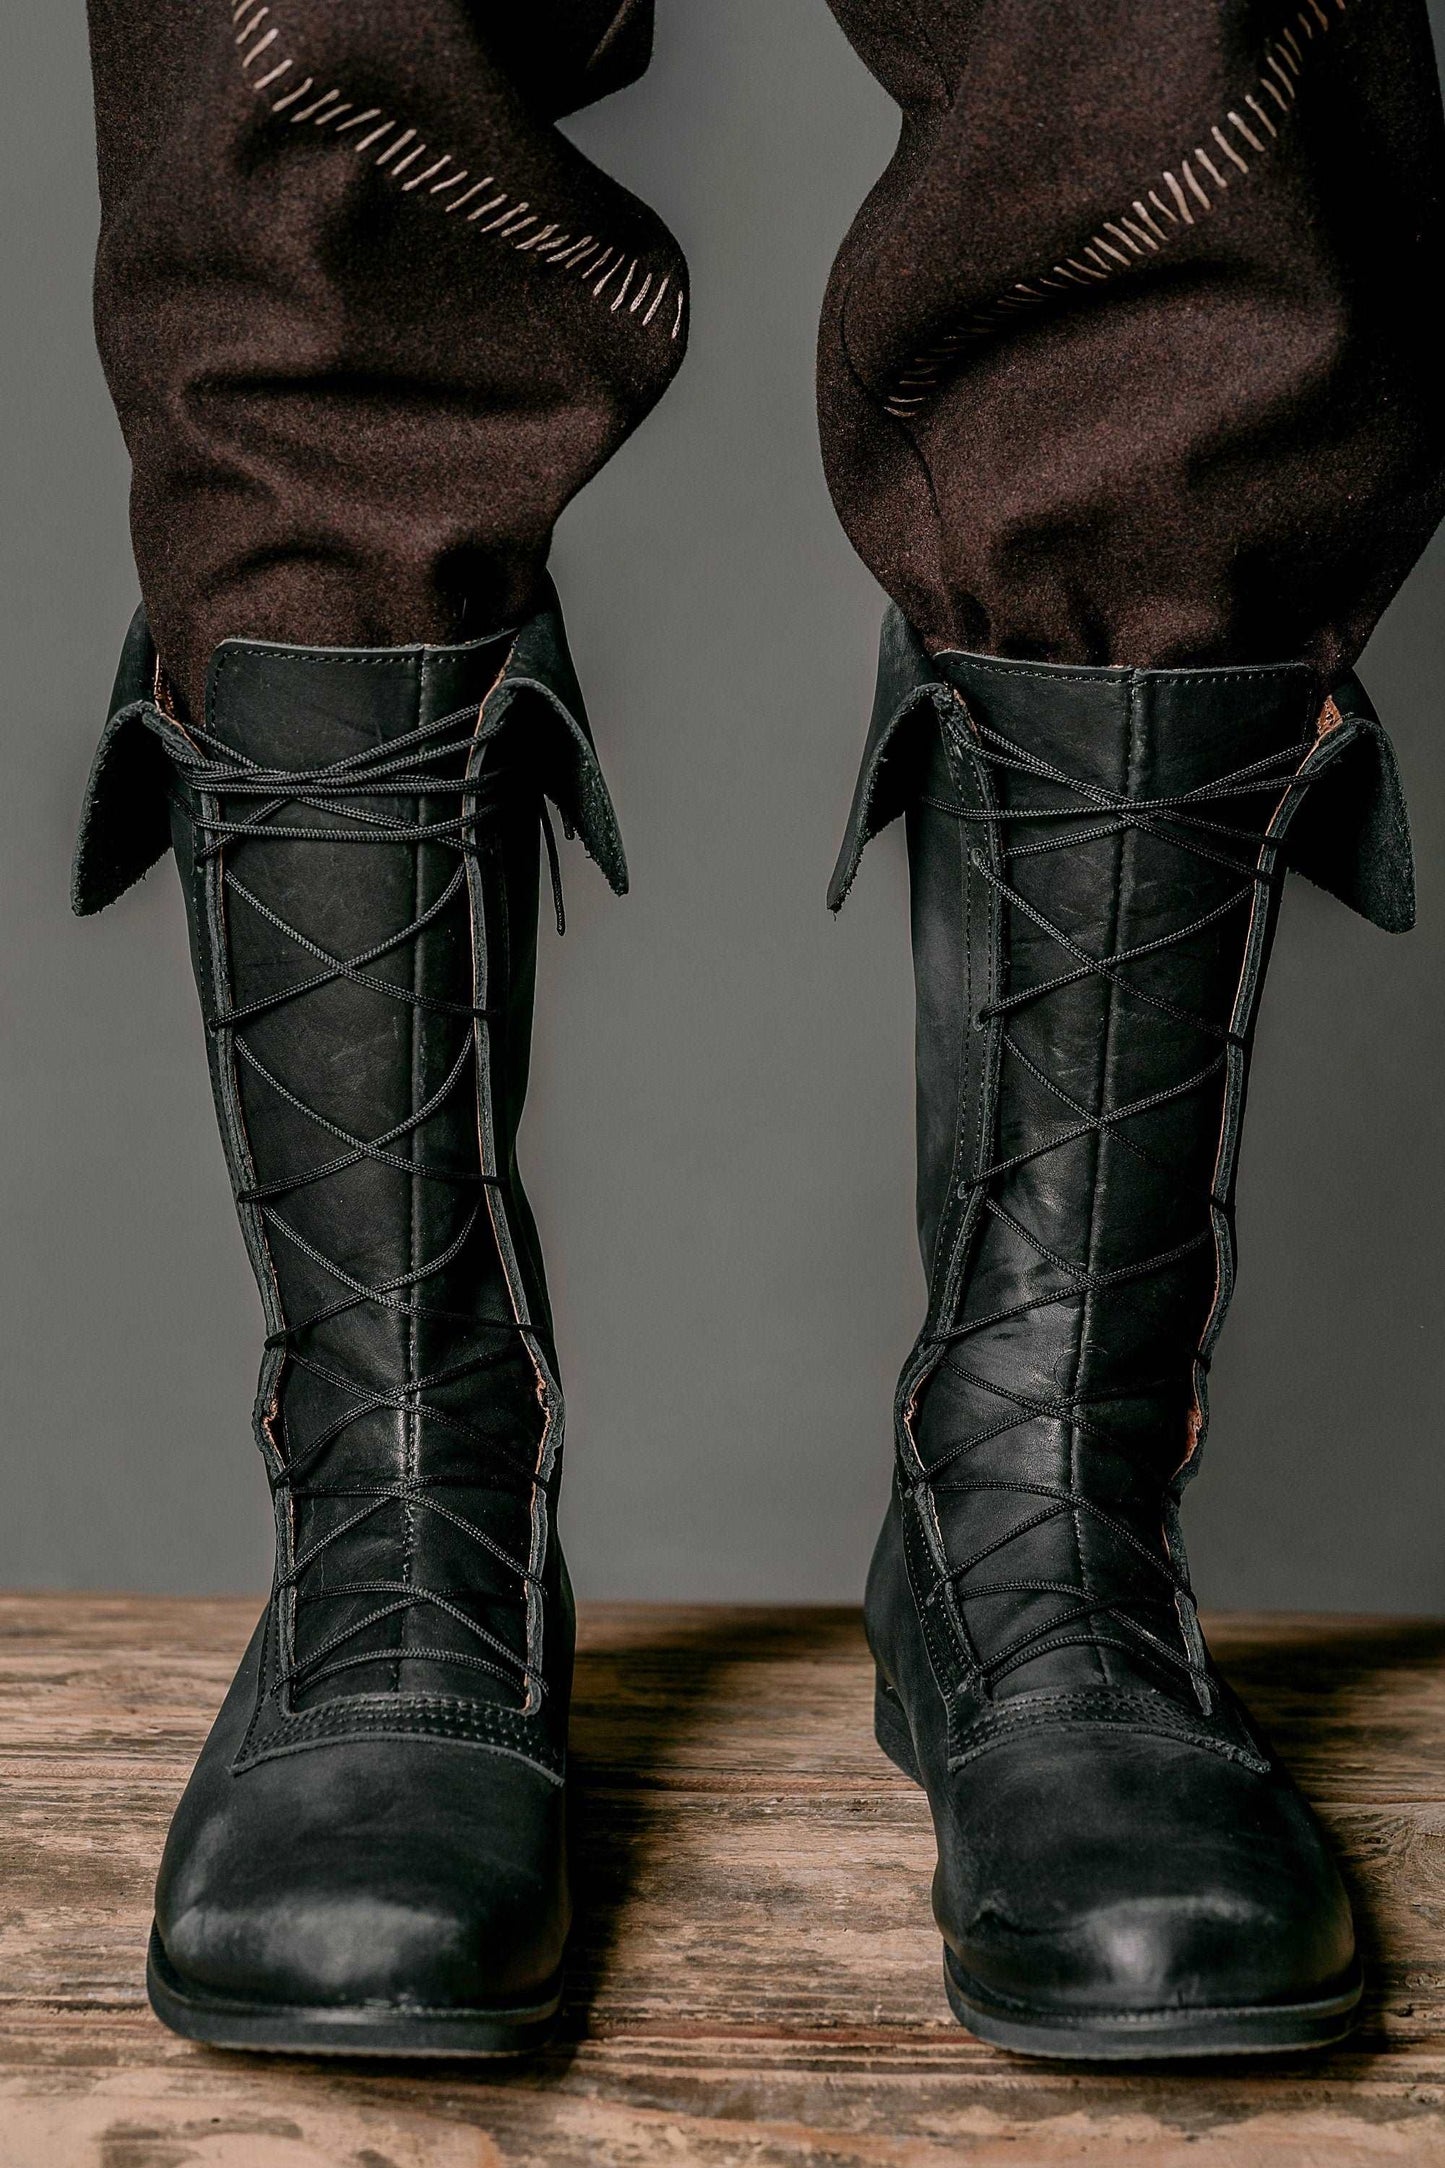 Charles Vane leather high boots (black sails)